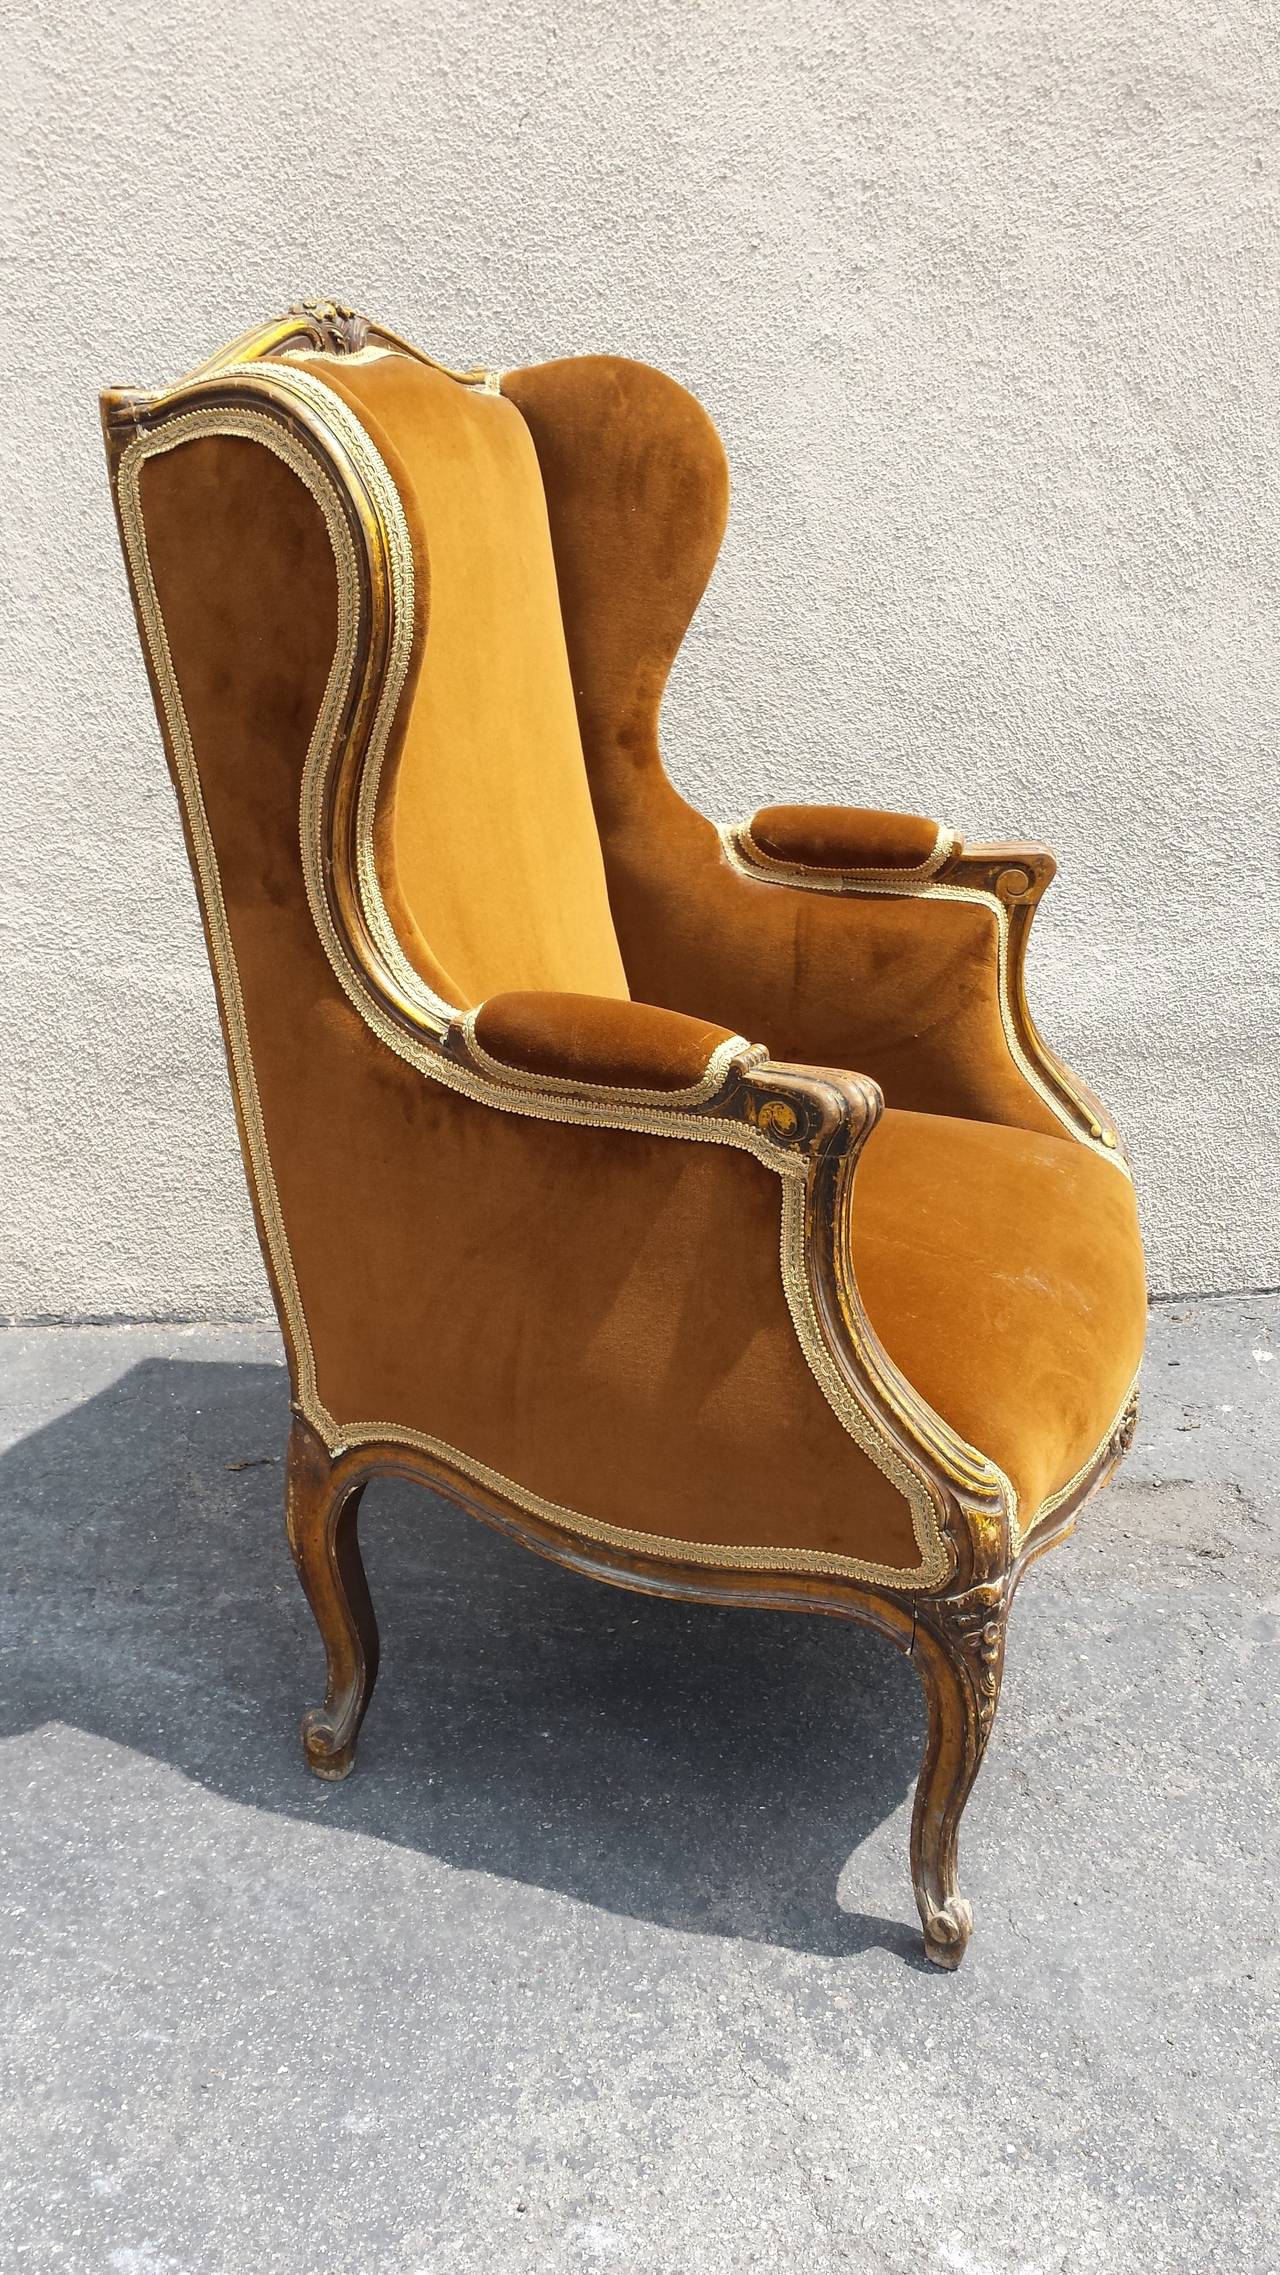 Beautiful Armchair in original gold brown velvet upholstery.